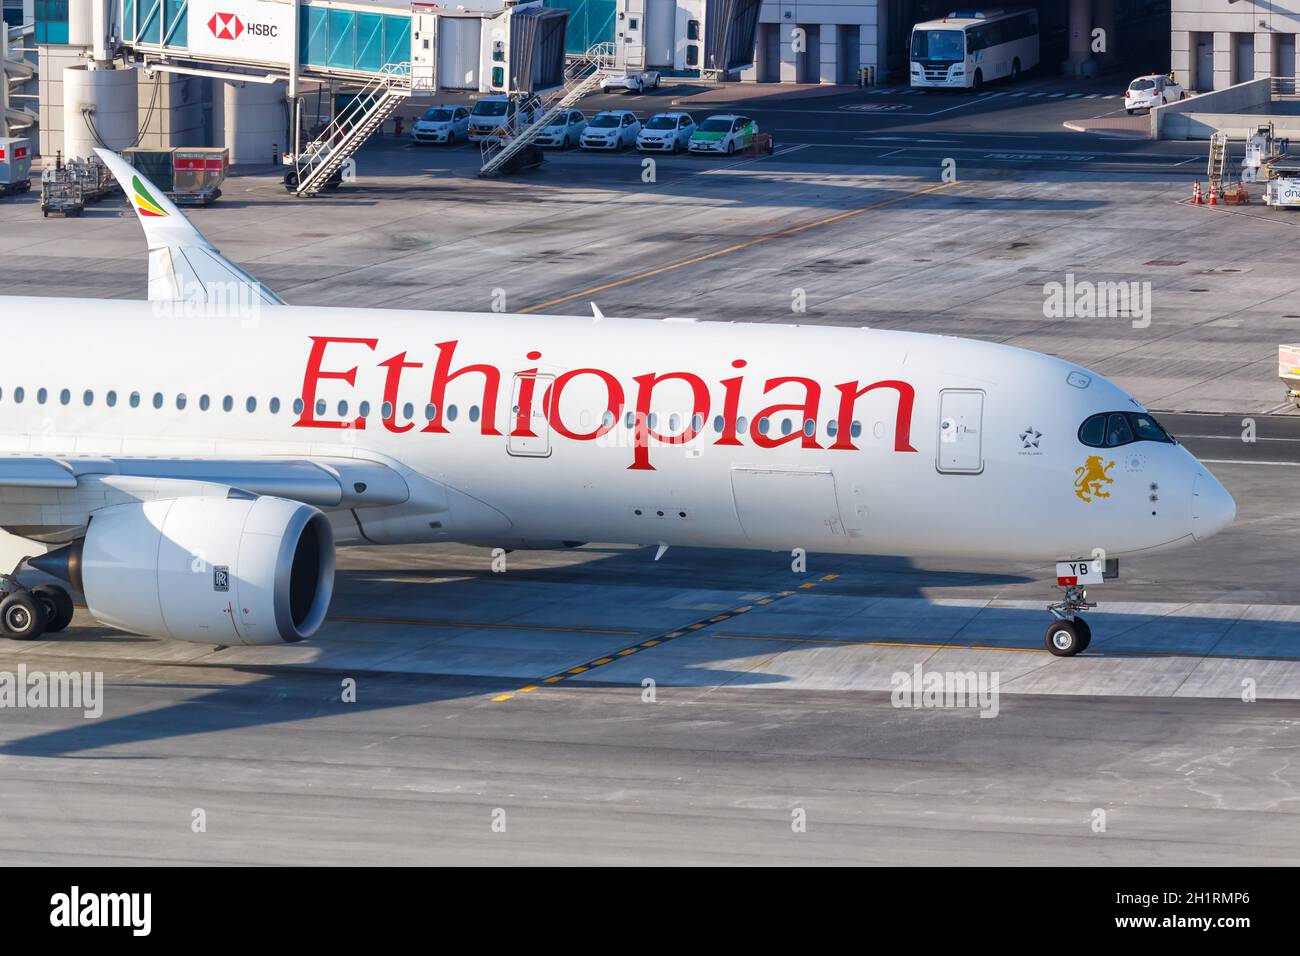 Dubai, United Arab Emirates - May 27, 2021: Ethiopian Airlines Airbus A350-900 airplane at Dubai airport (DXB) in the United Arab Emirates. Stock Photo